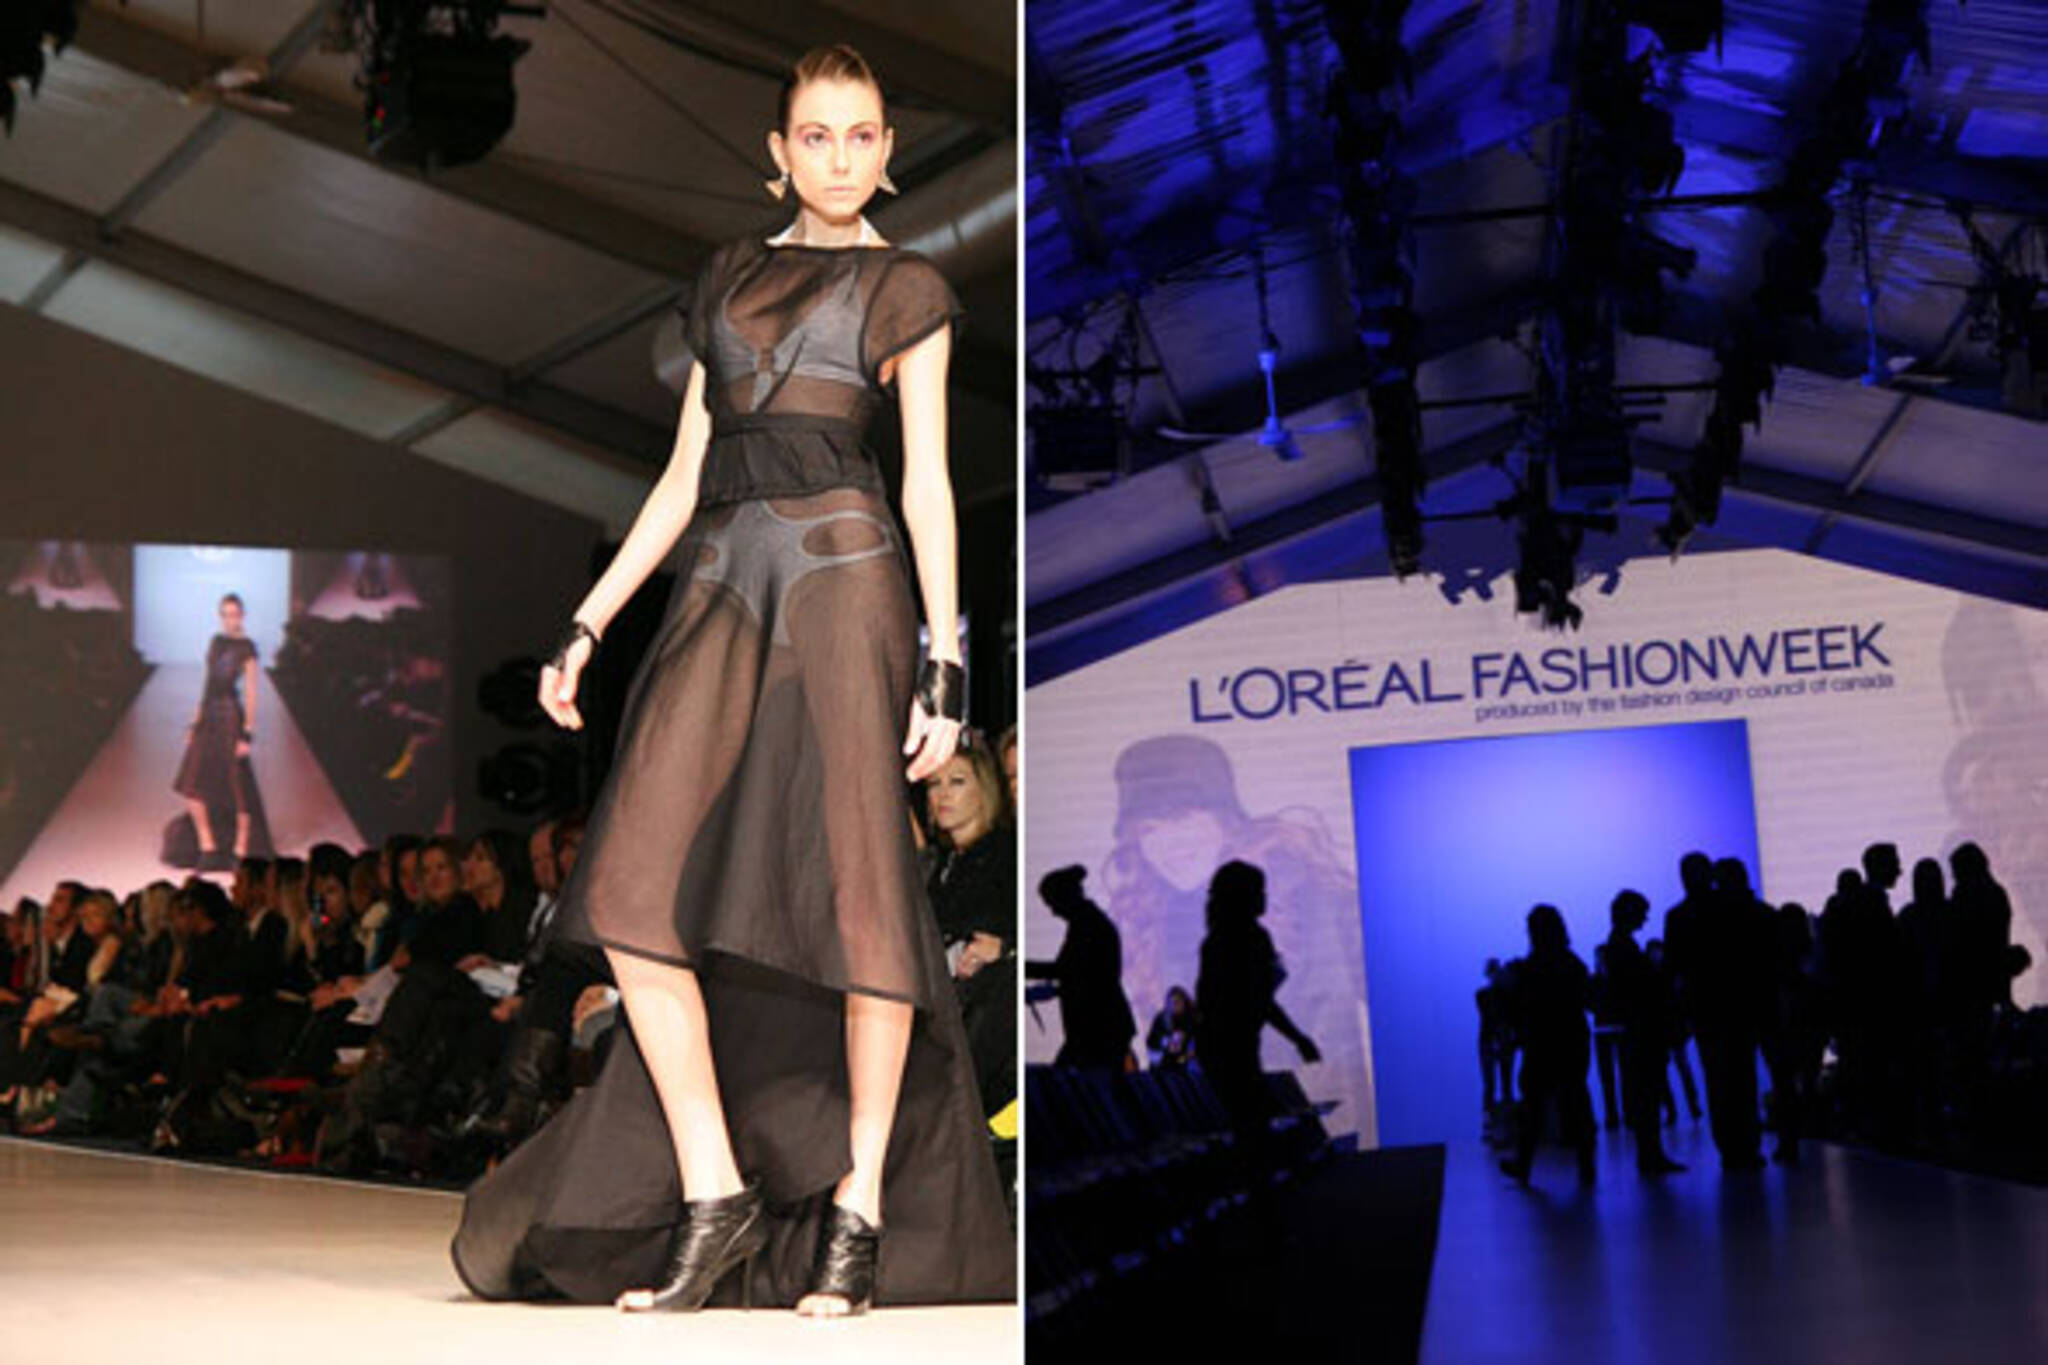 L'Oreal Fashion Week 2008